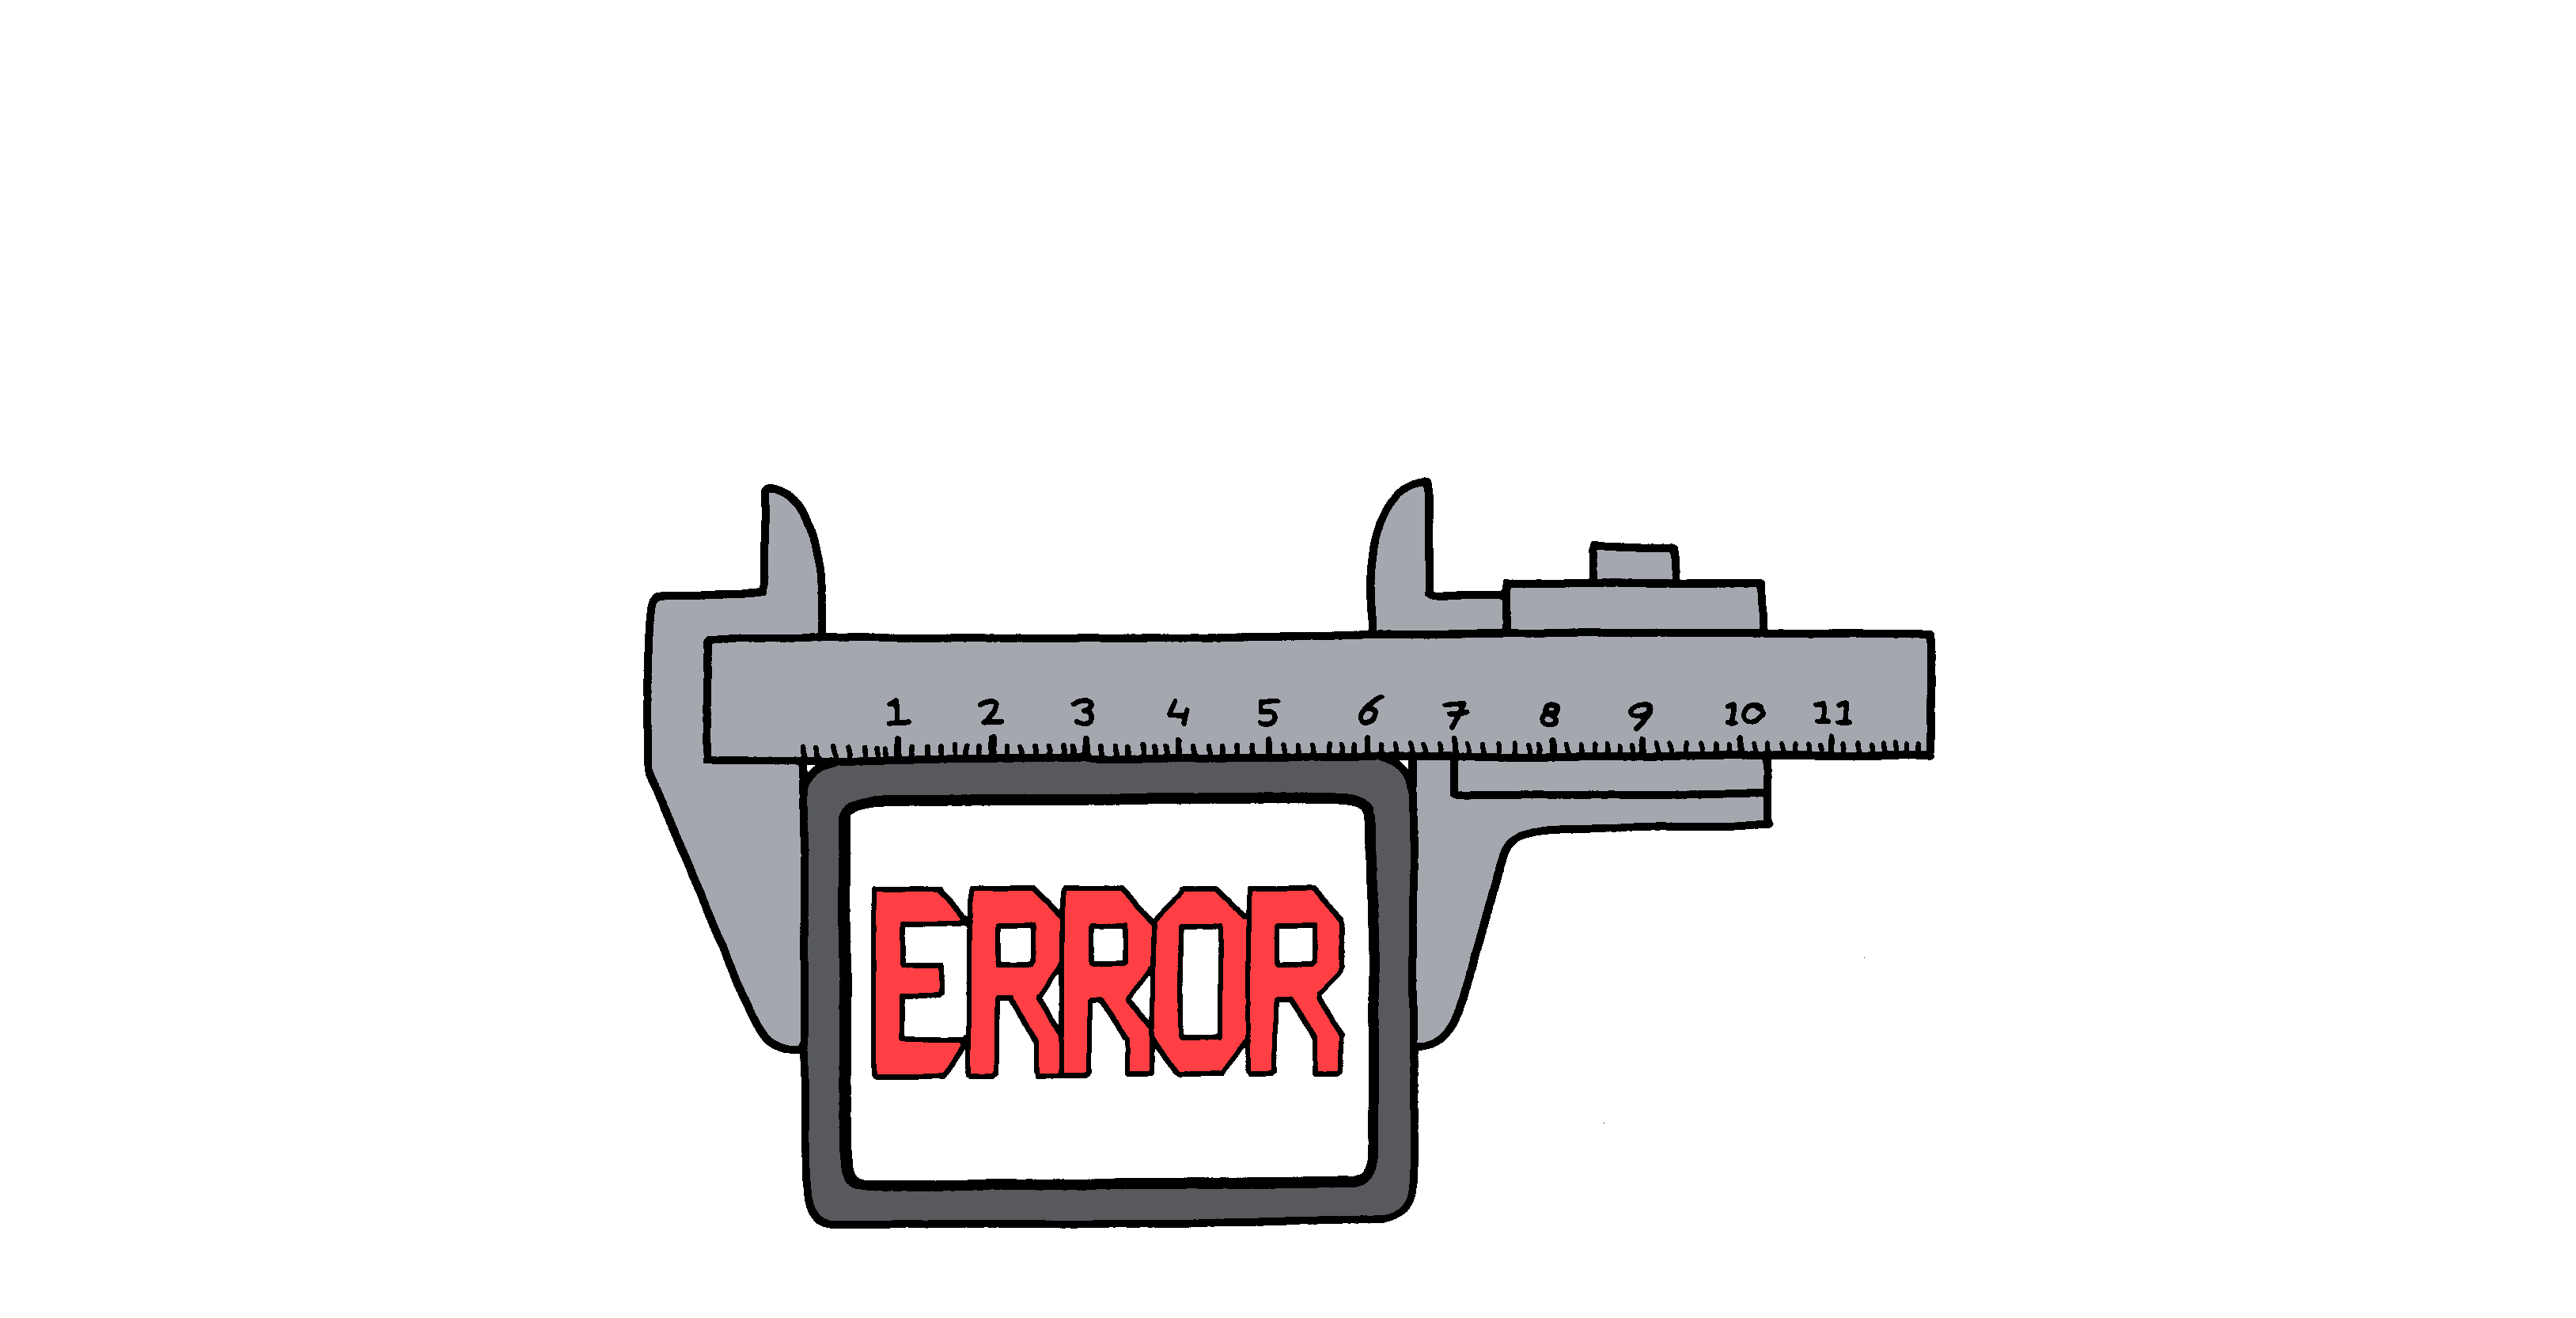 Measuring Error